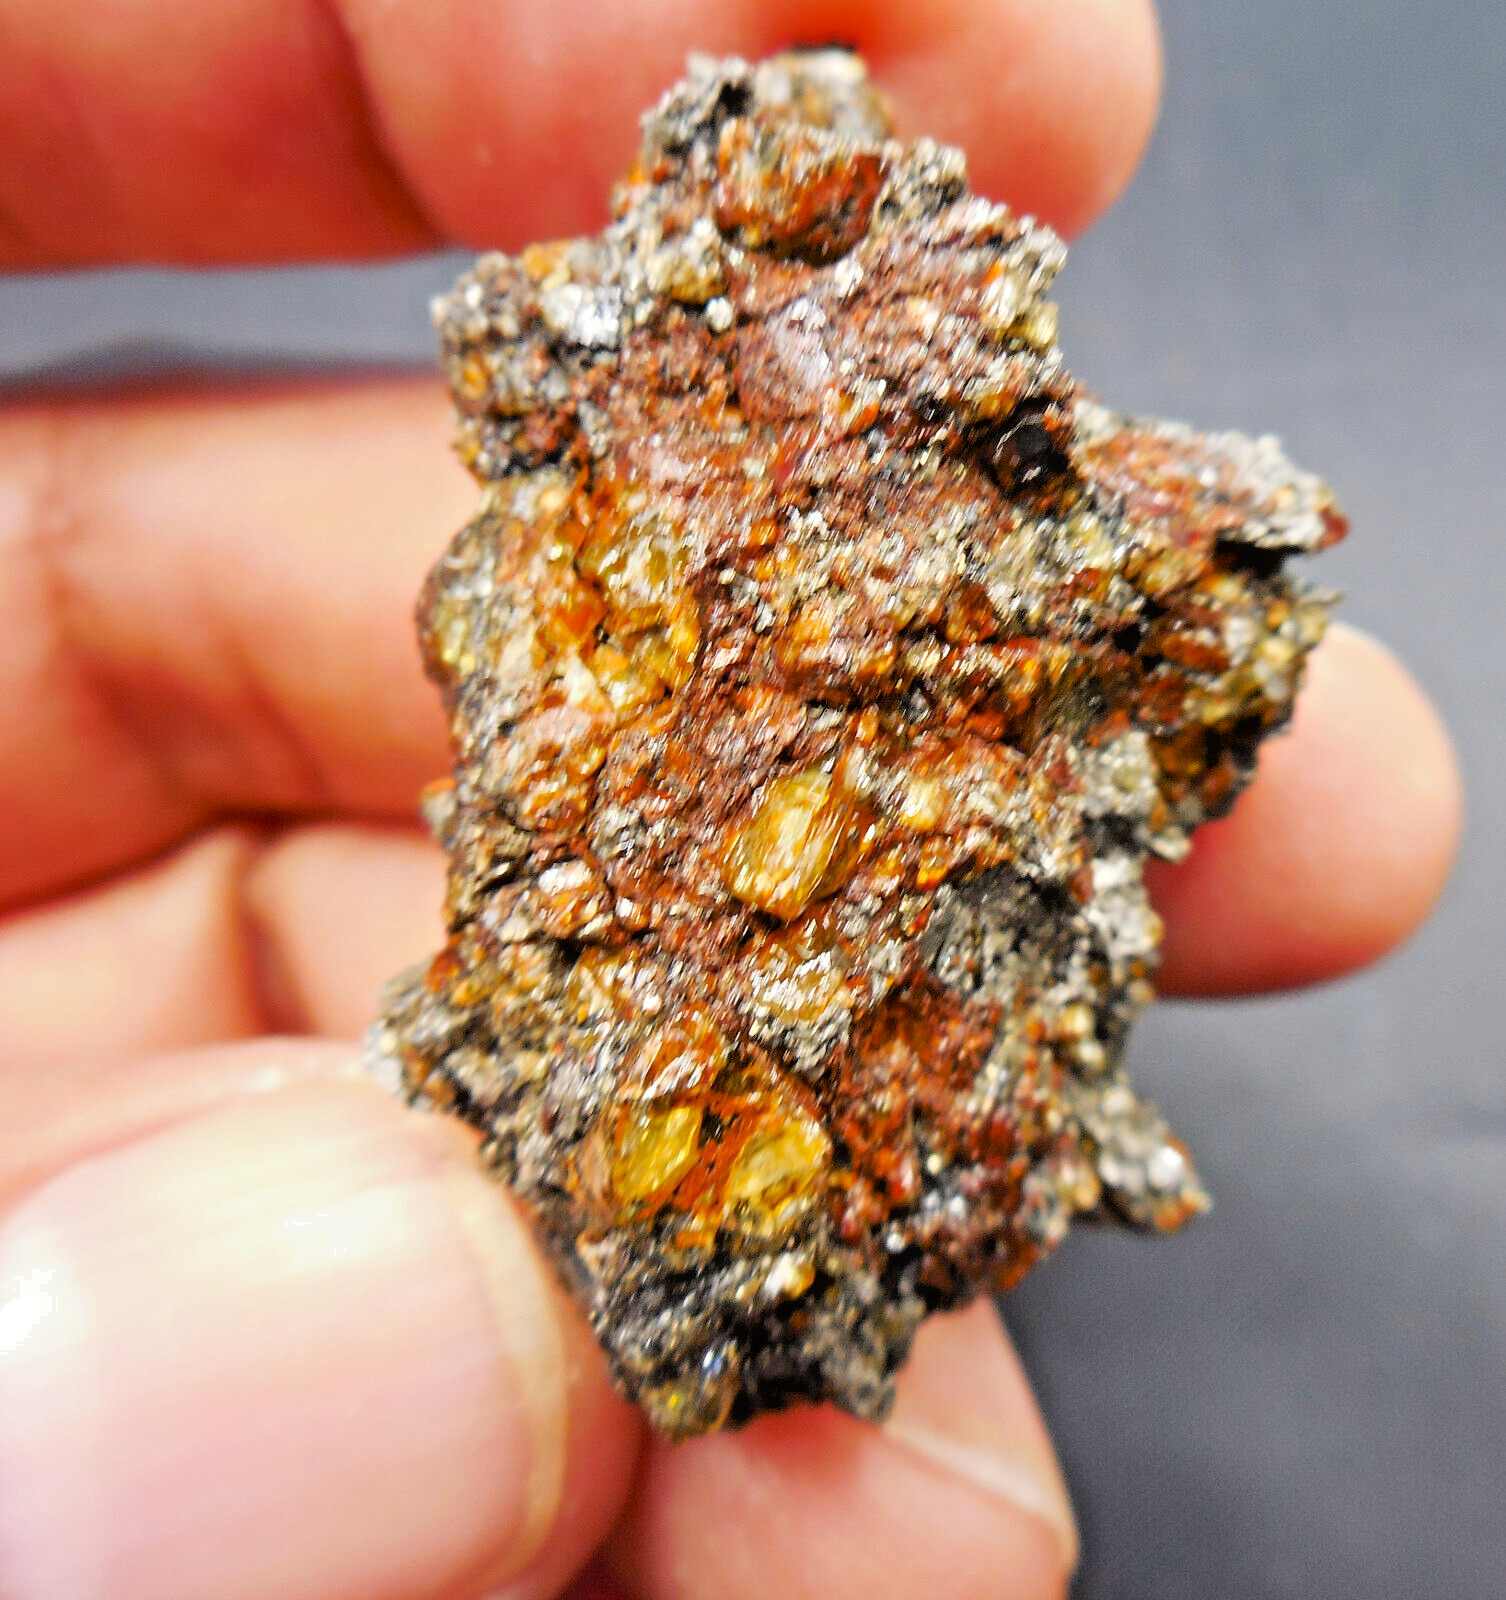 25.70 gram - BRAHIN PALLASITE METEORITE crystal - Stabilized and beautiful